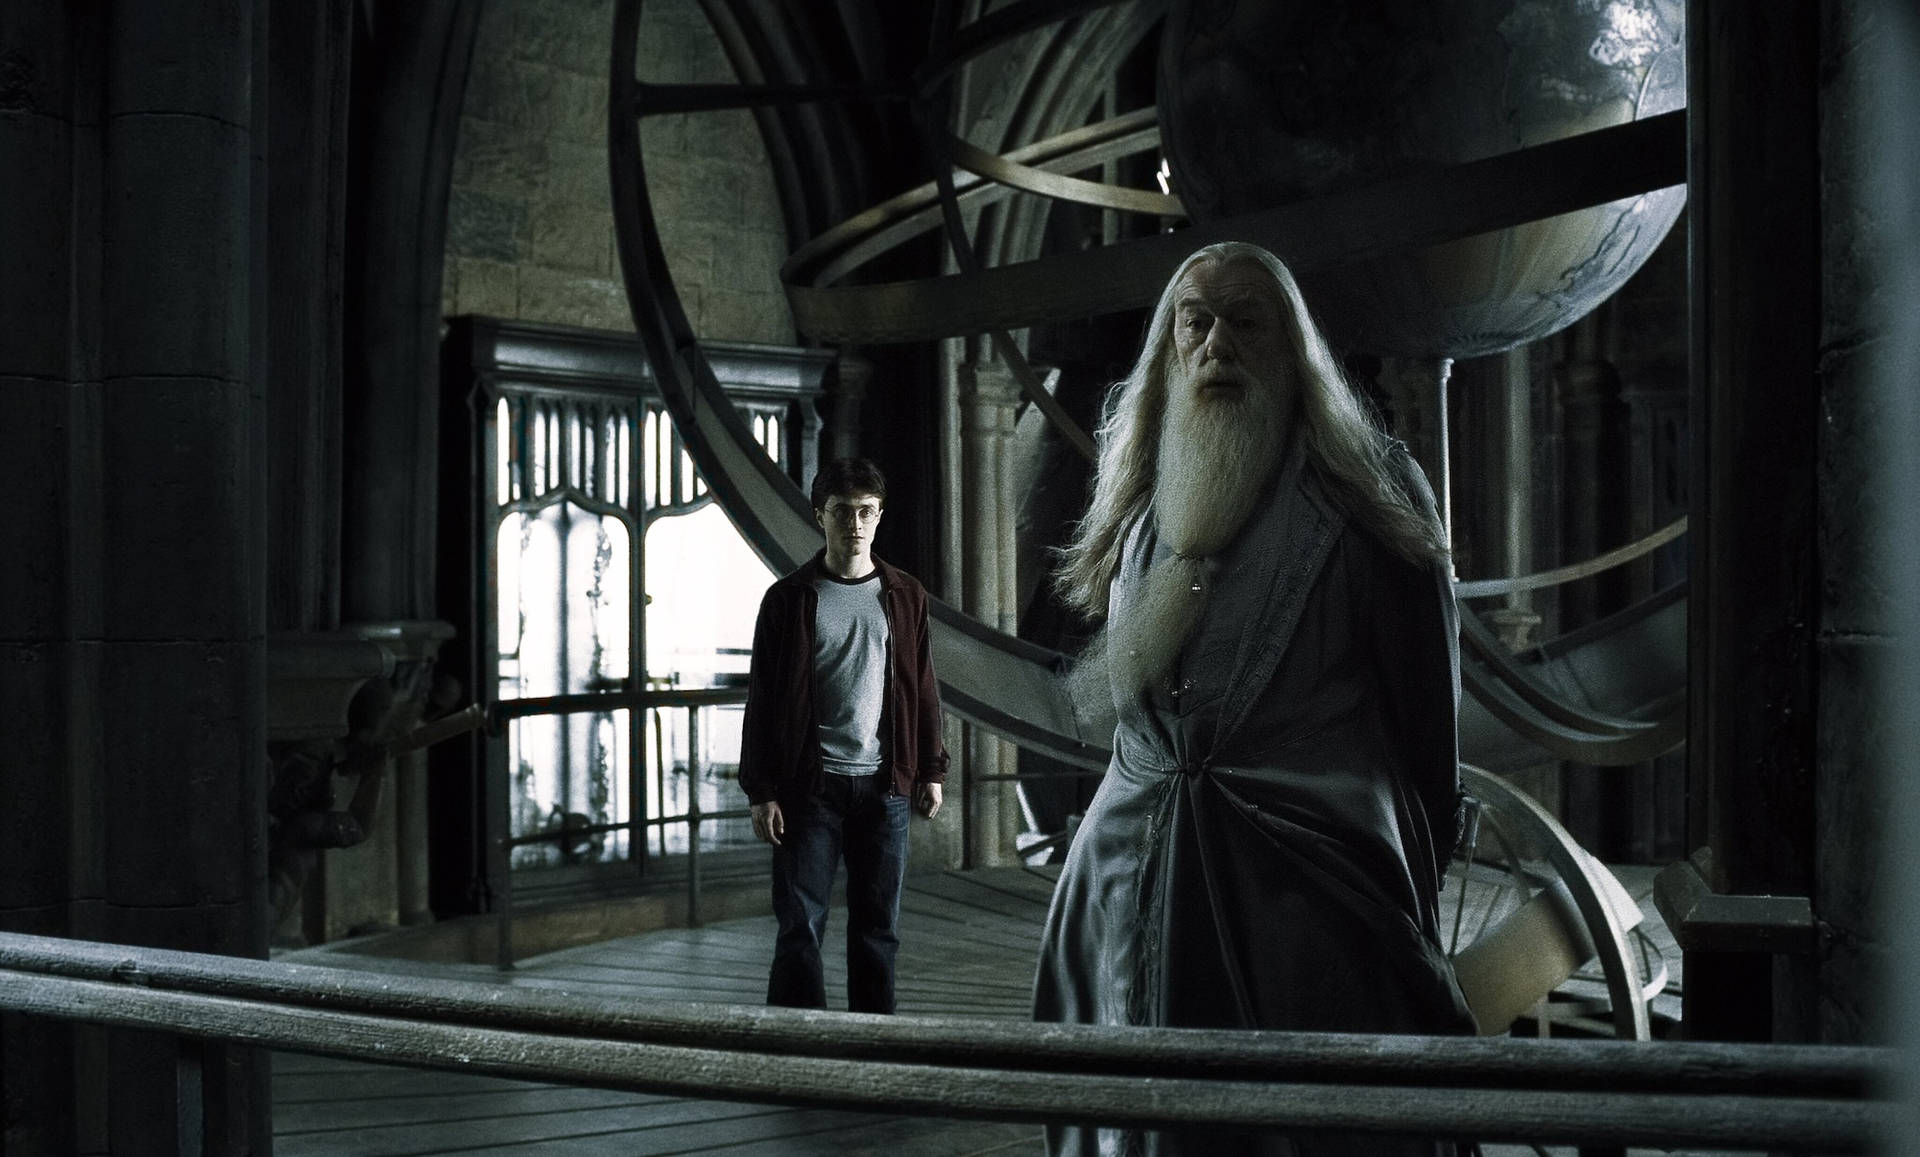 A Masterful Portrait Of Albus Dumbledore